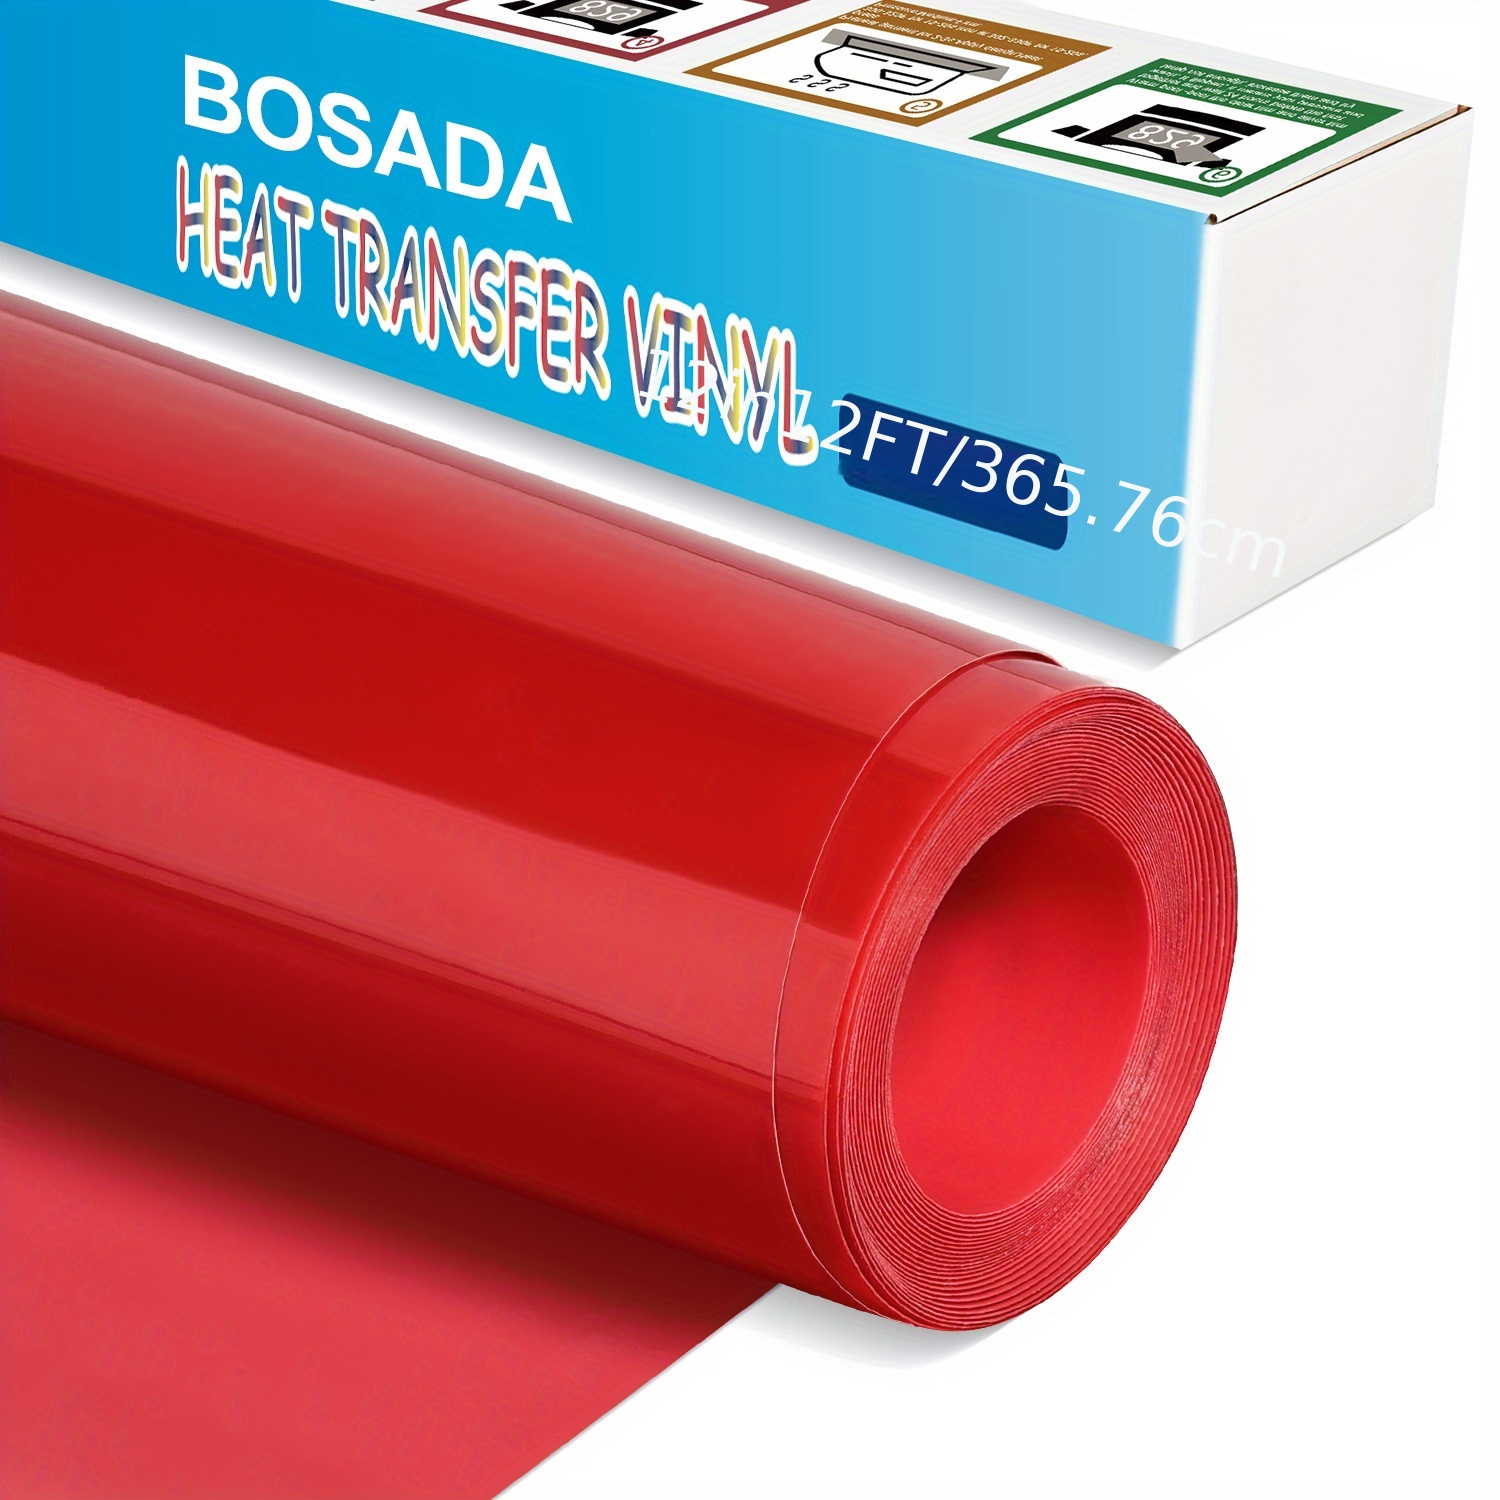 Red Heat Transfer Vinyl Rolls By Craftables